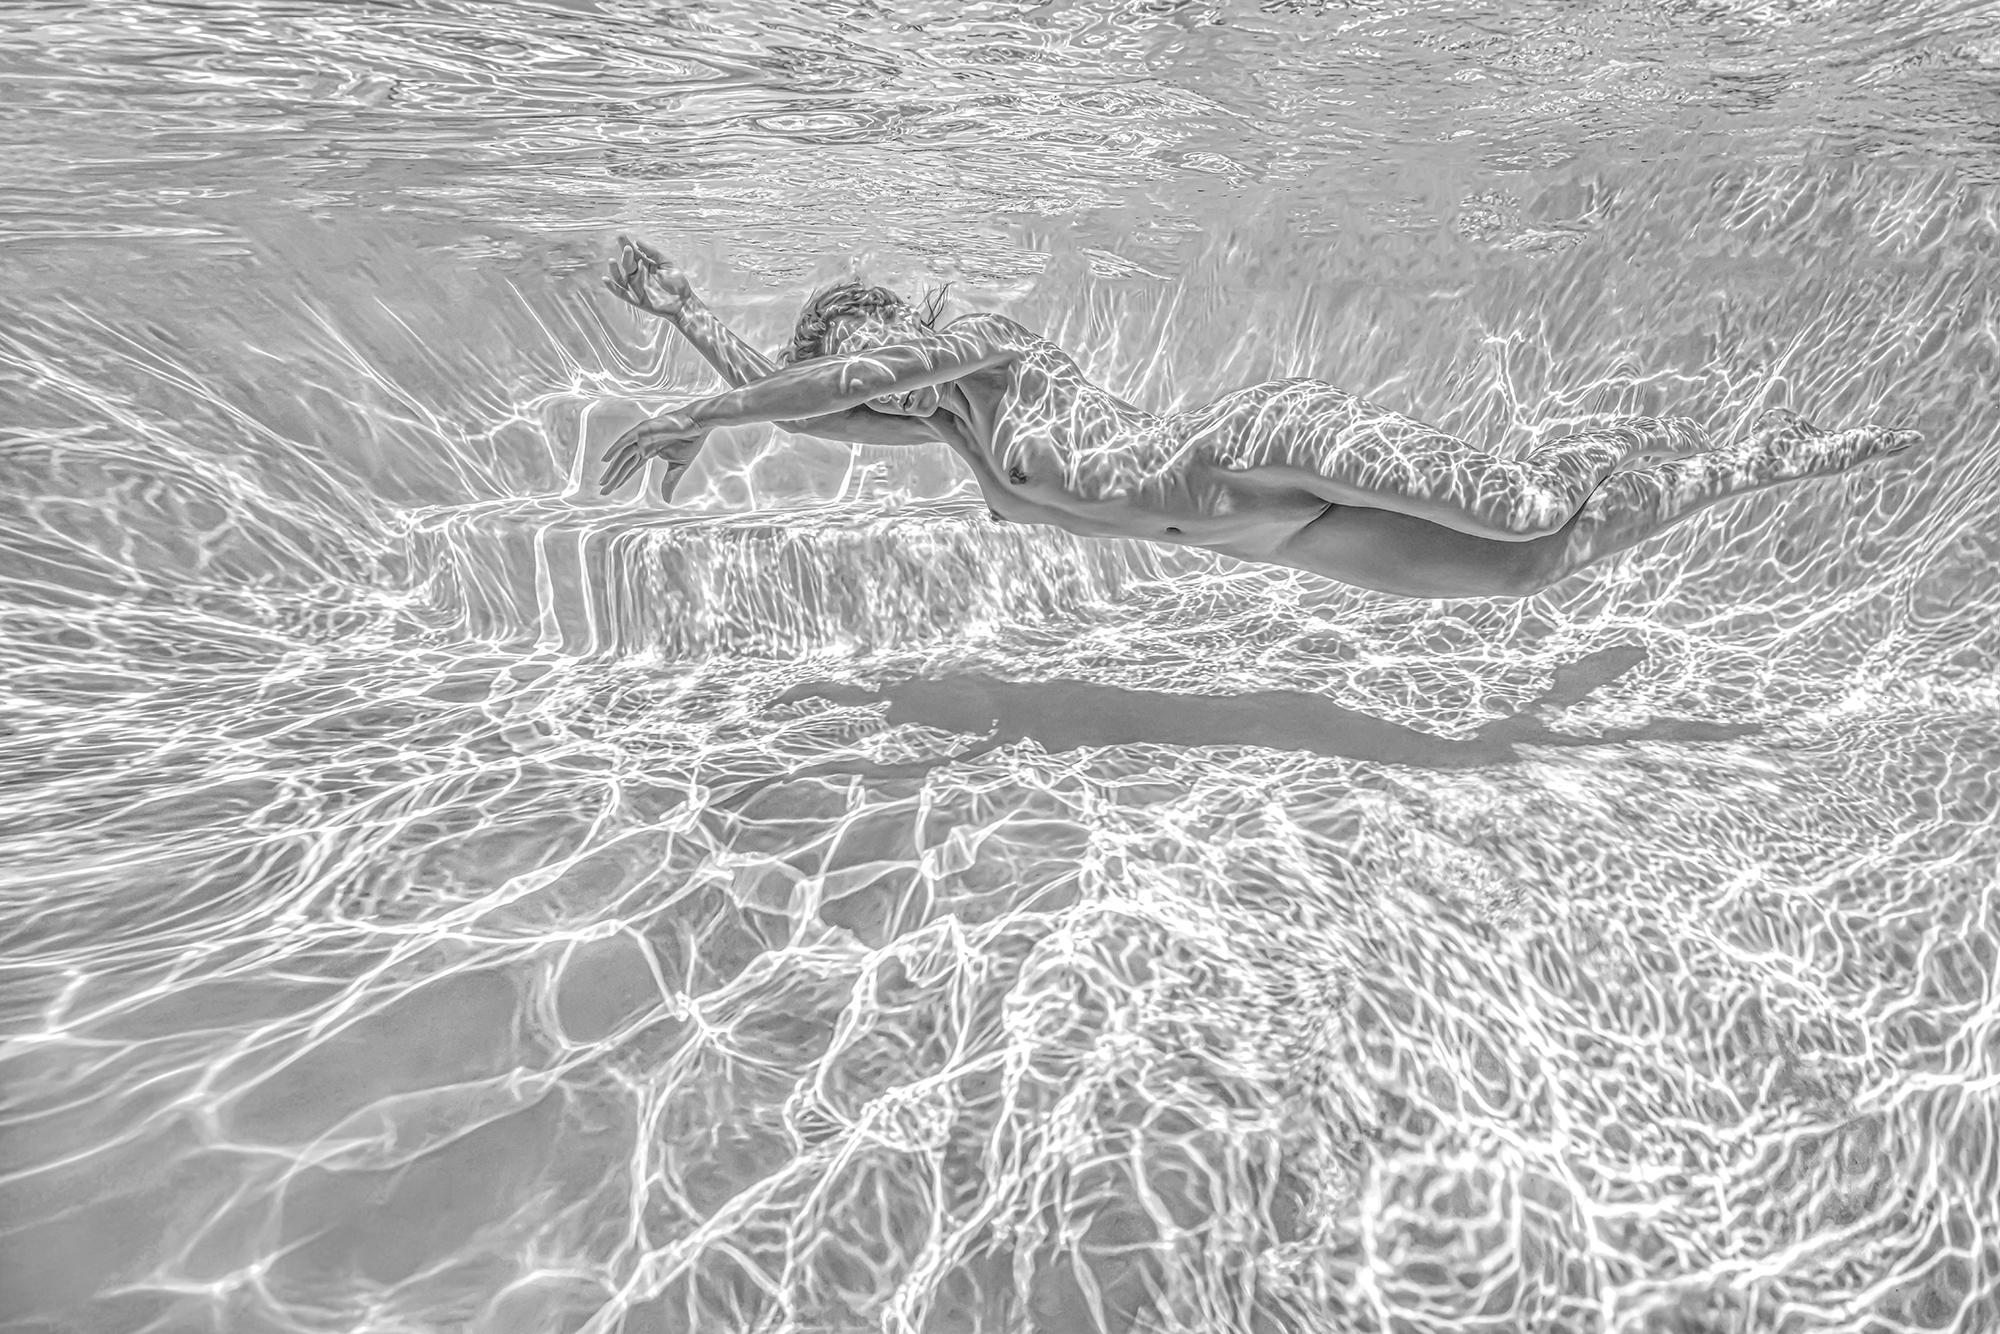 Thunderweb - underwater black & white nude photograph - print on paper 24" x 36"